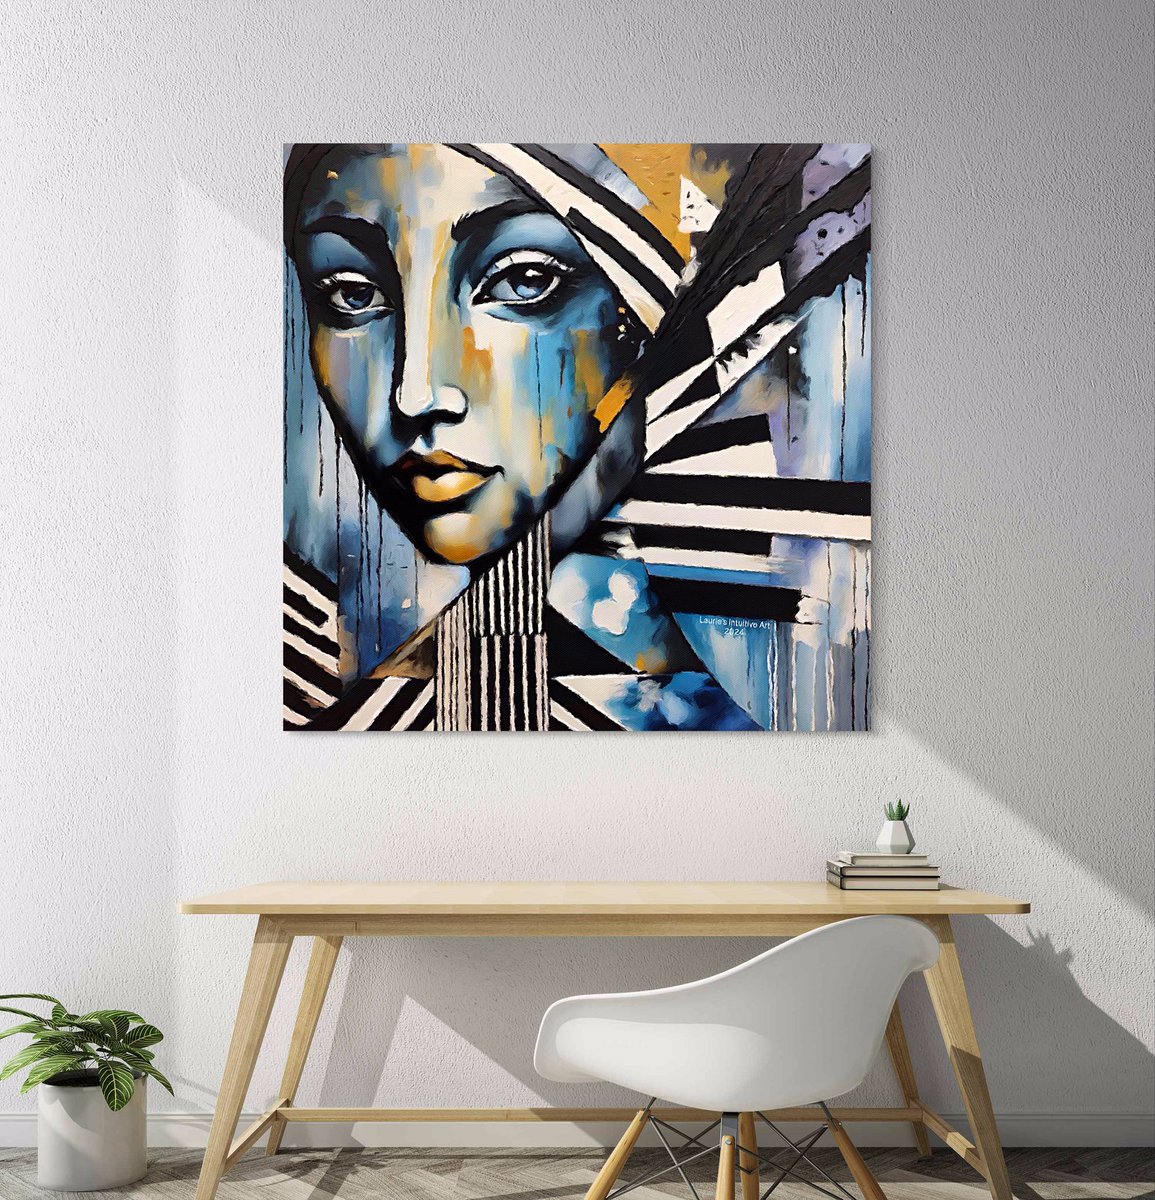 Contemplative Gaze. Happy Monday!😊
lauriesintuitiveart.pixels.com/featured/conte…
#AYearForArt #homedecor #WallArtDecor #gaze #abstractpainting #geometricpattern #blue #gold #stripes #contrast #portrait #music